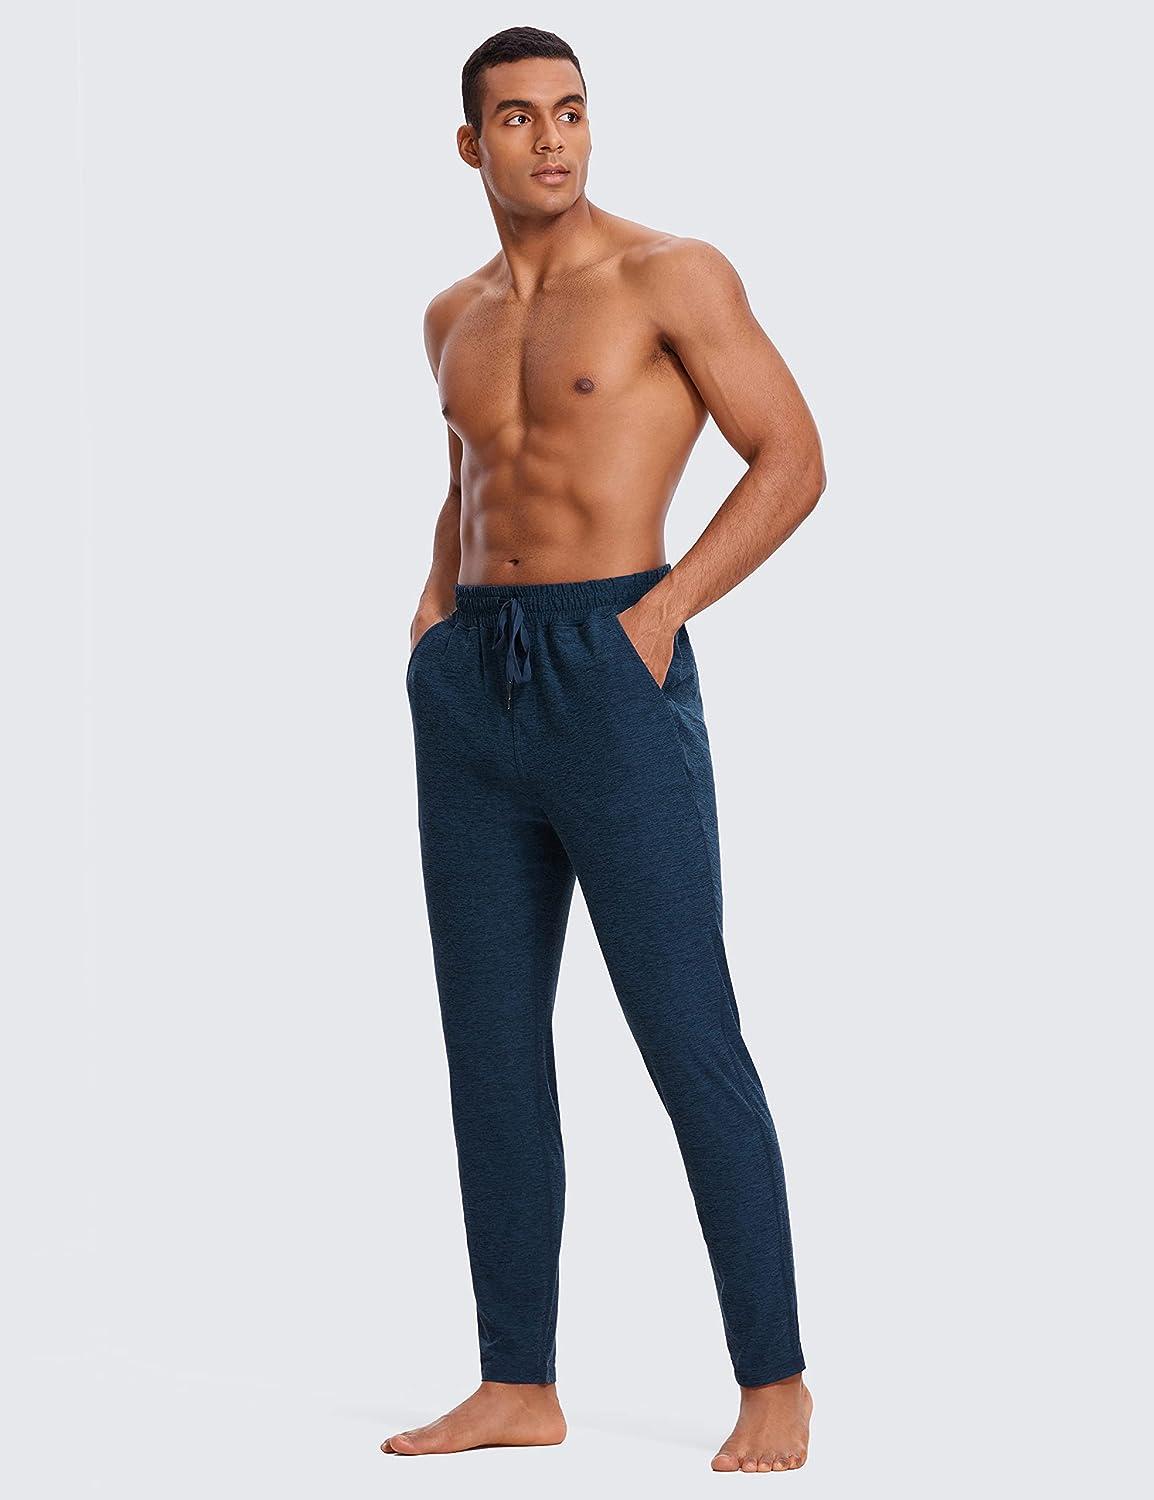 CRZ YOGA Mens Comfy Lounge Pants 30 - Super-Soft Open Bottom Yoga